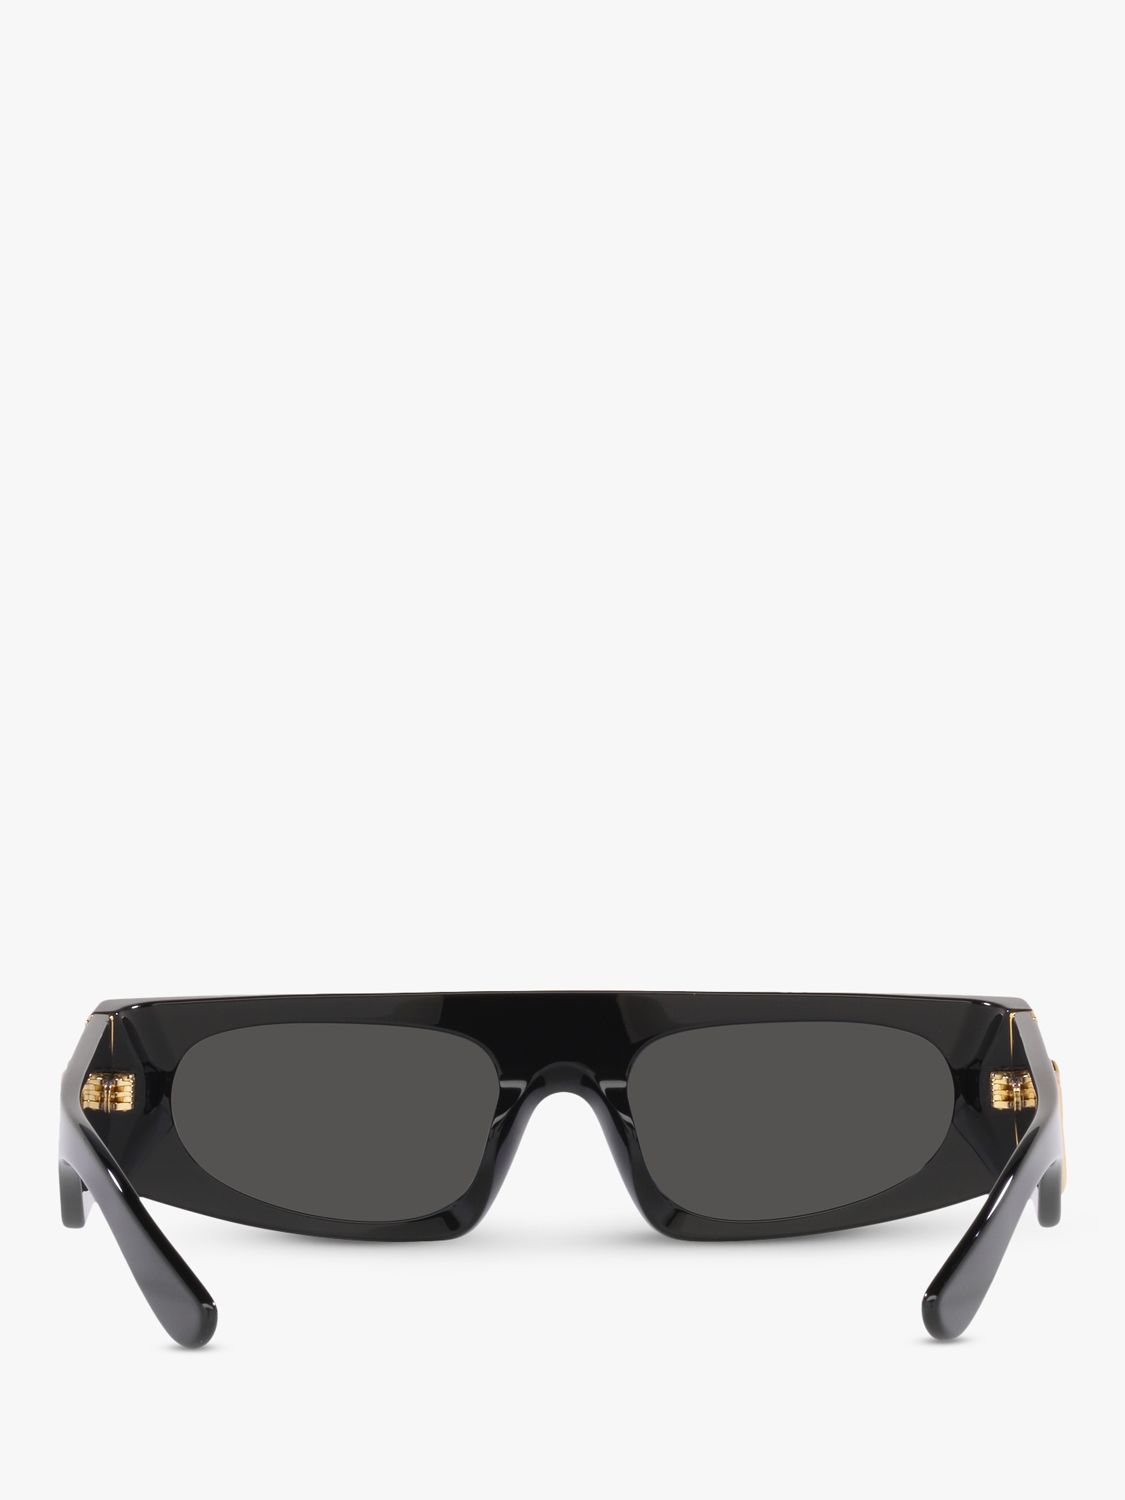 Buy Dolce & Gabbana DG4411 Women's Rectangular Sunglasses, Black/Grey Online at johnlewis.com